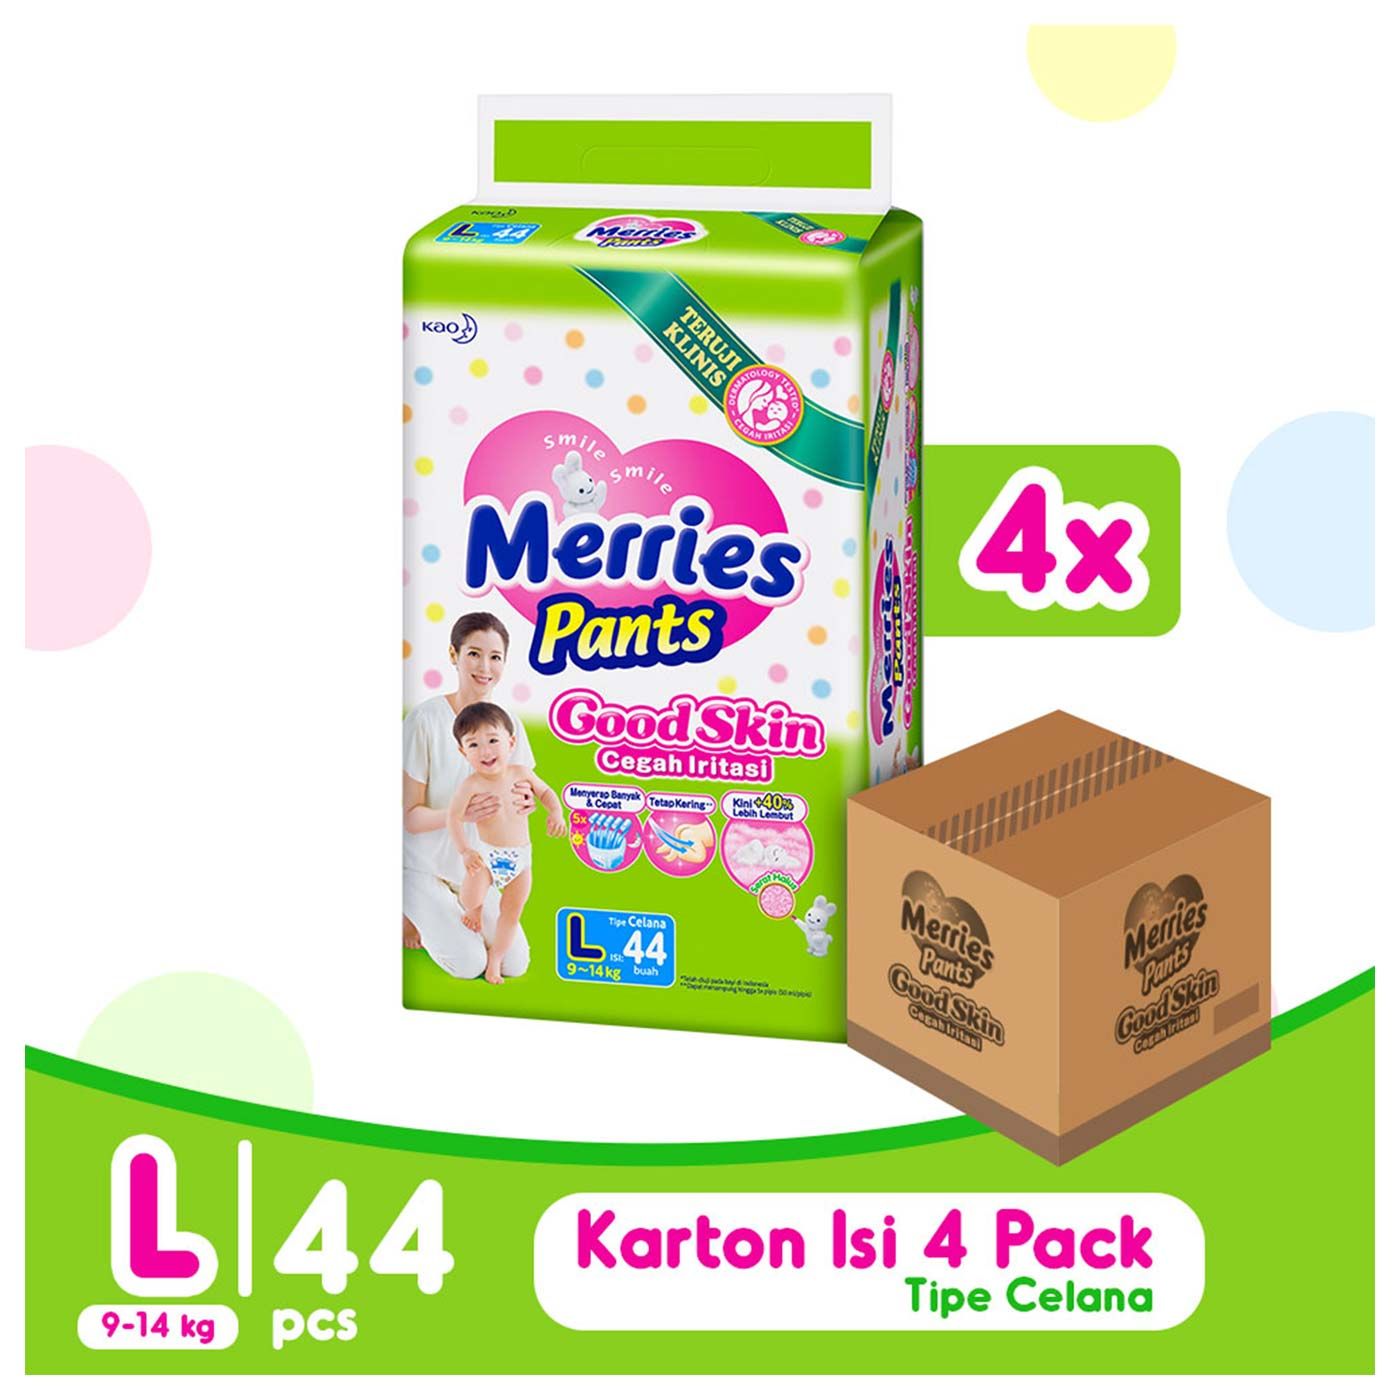 Merries Pants Good Skin L44- Karton - 1